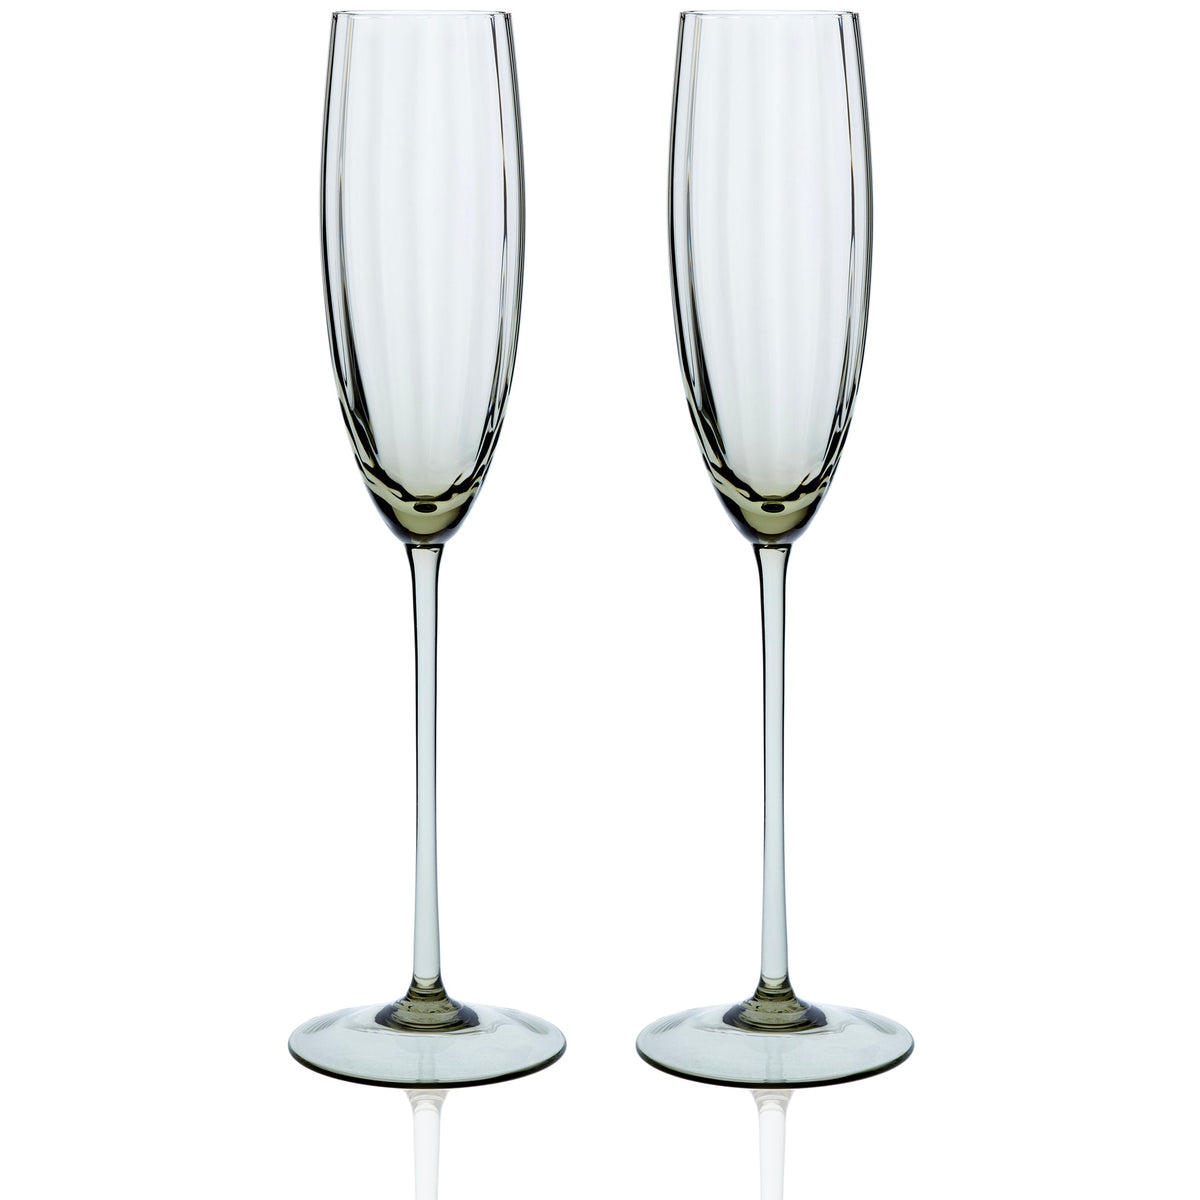 Quinn Champagne Flute Glasses, Set of 2